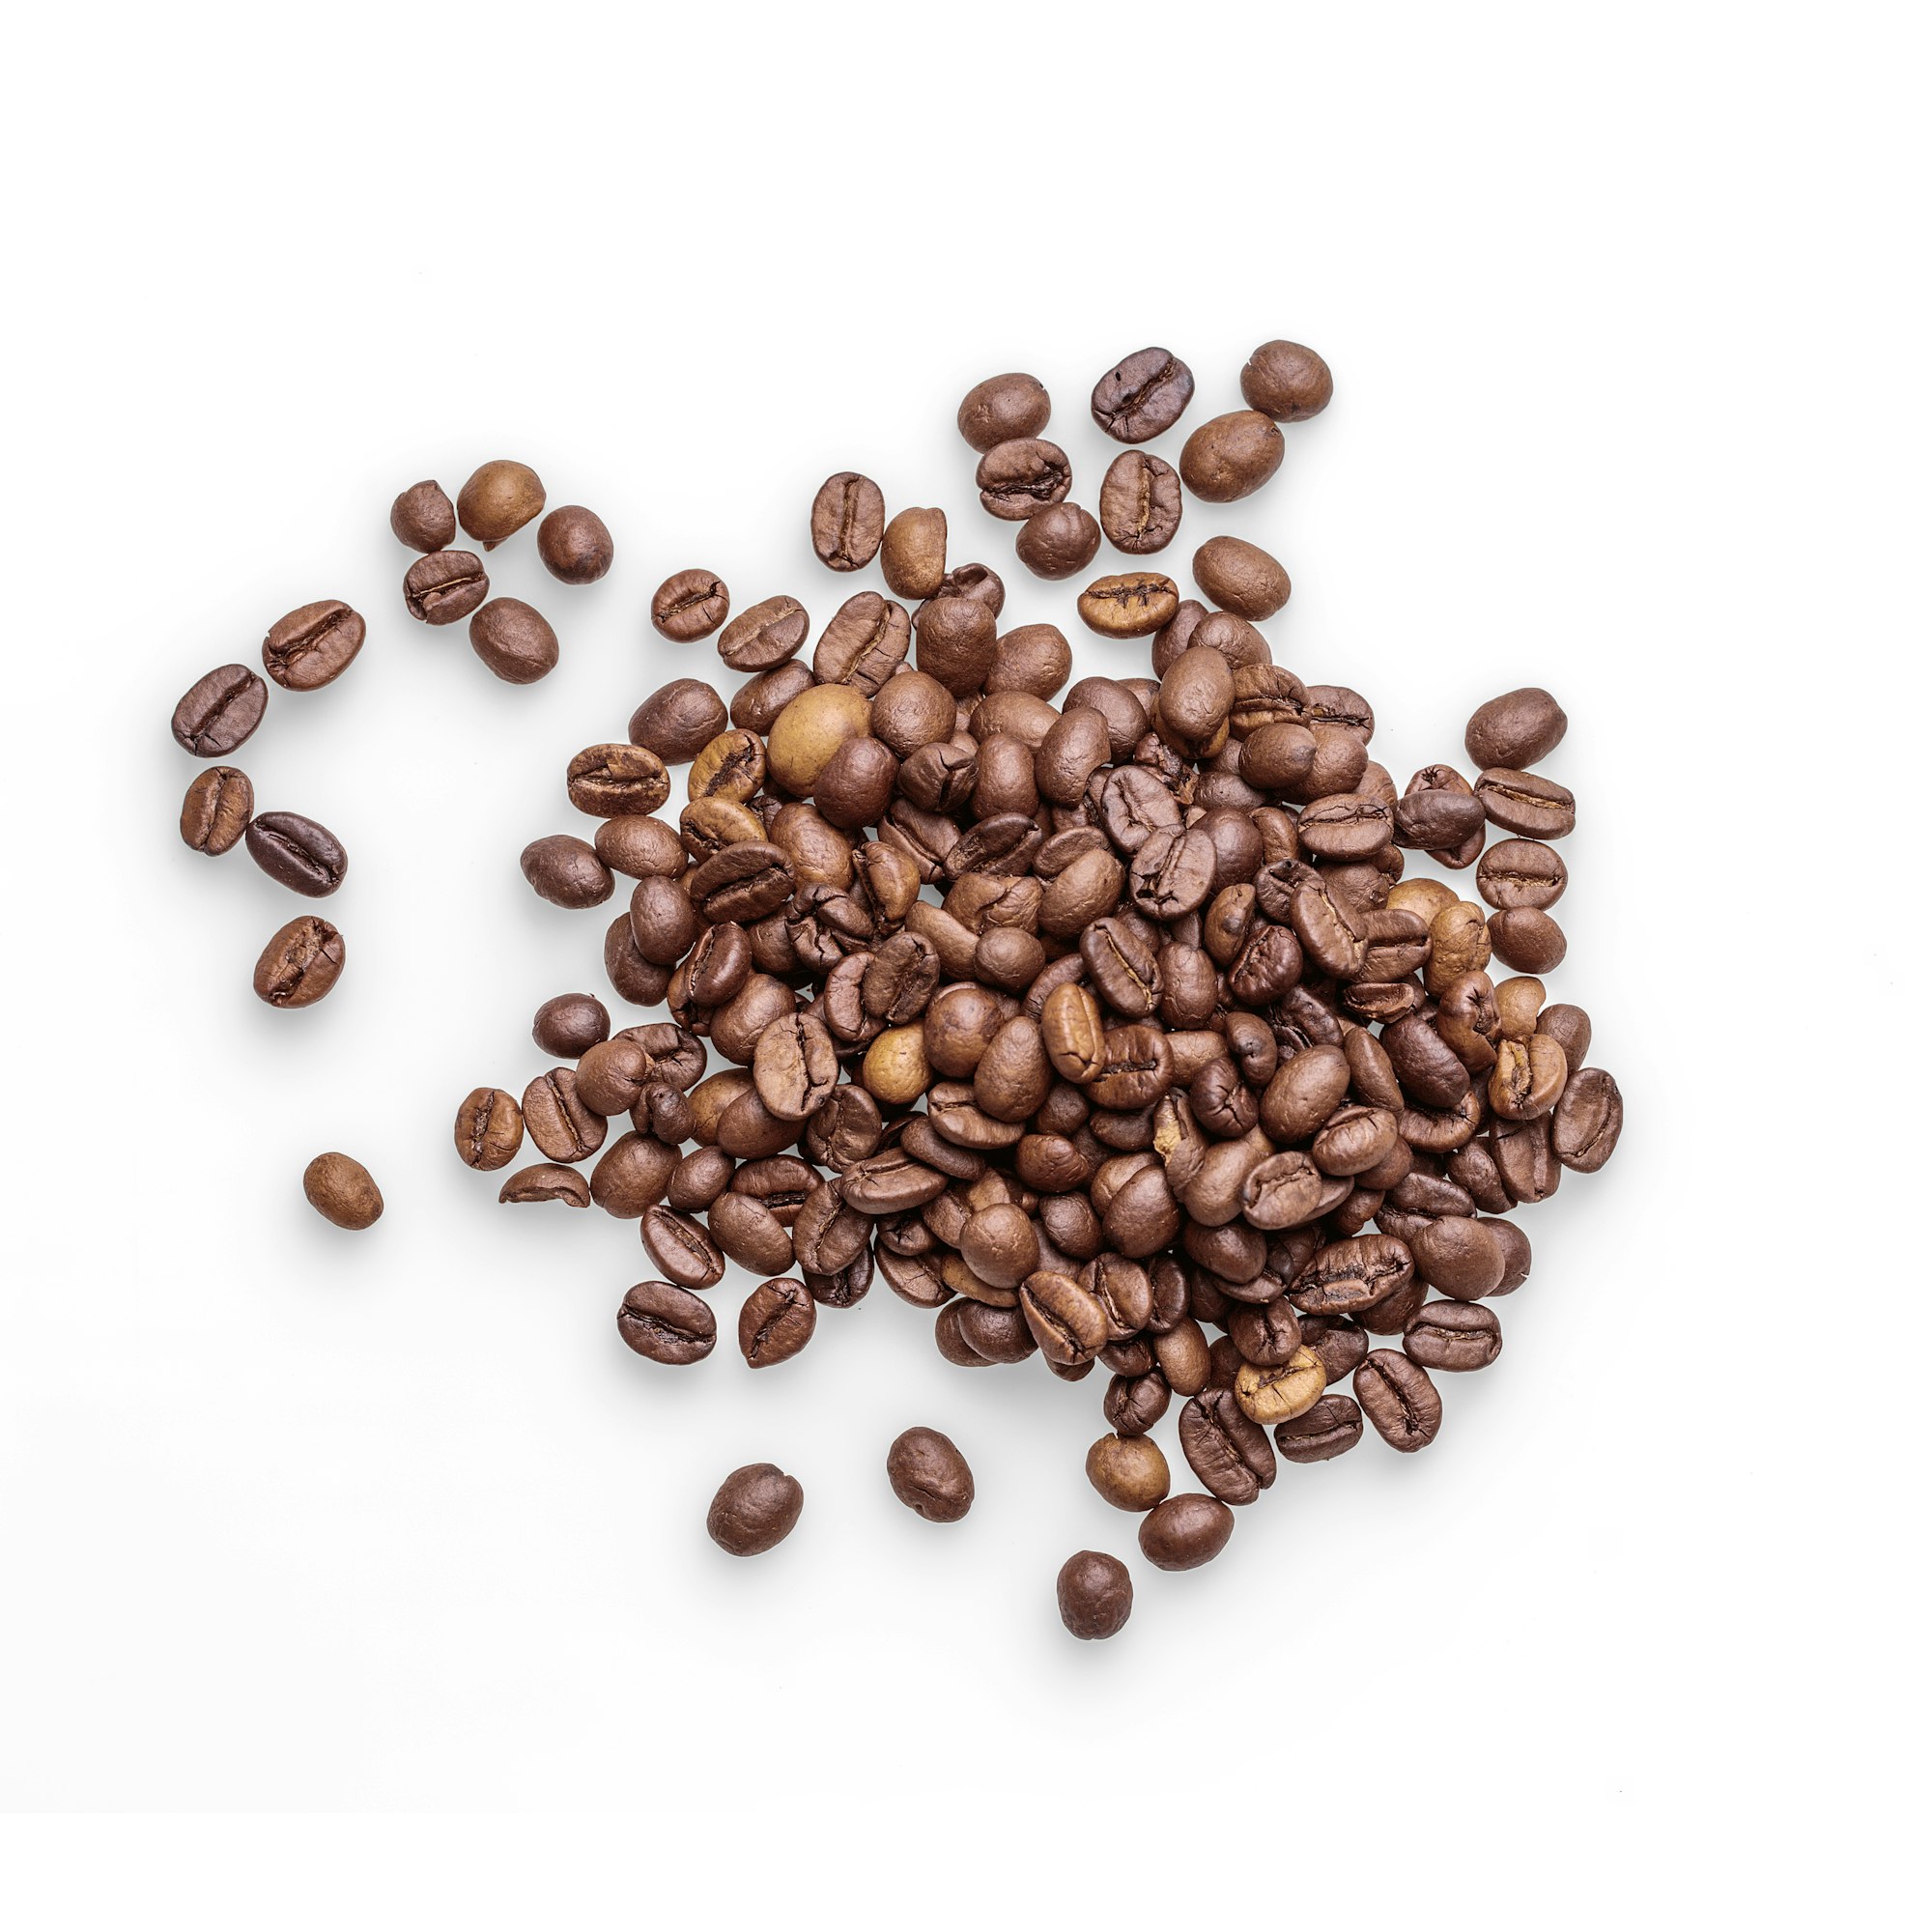 5 Best Light Roast Coffee Brands